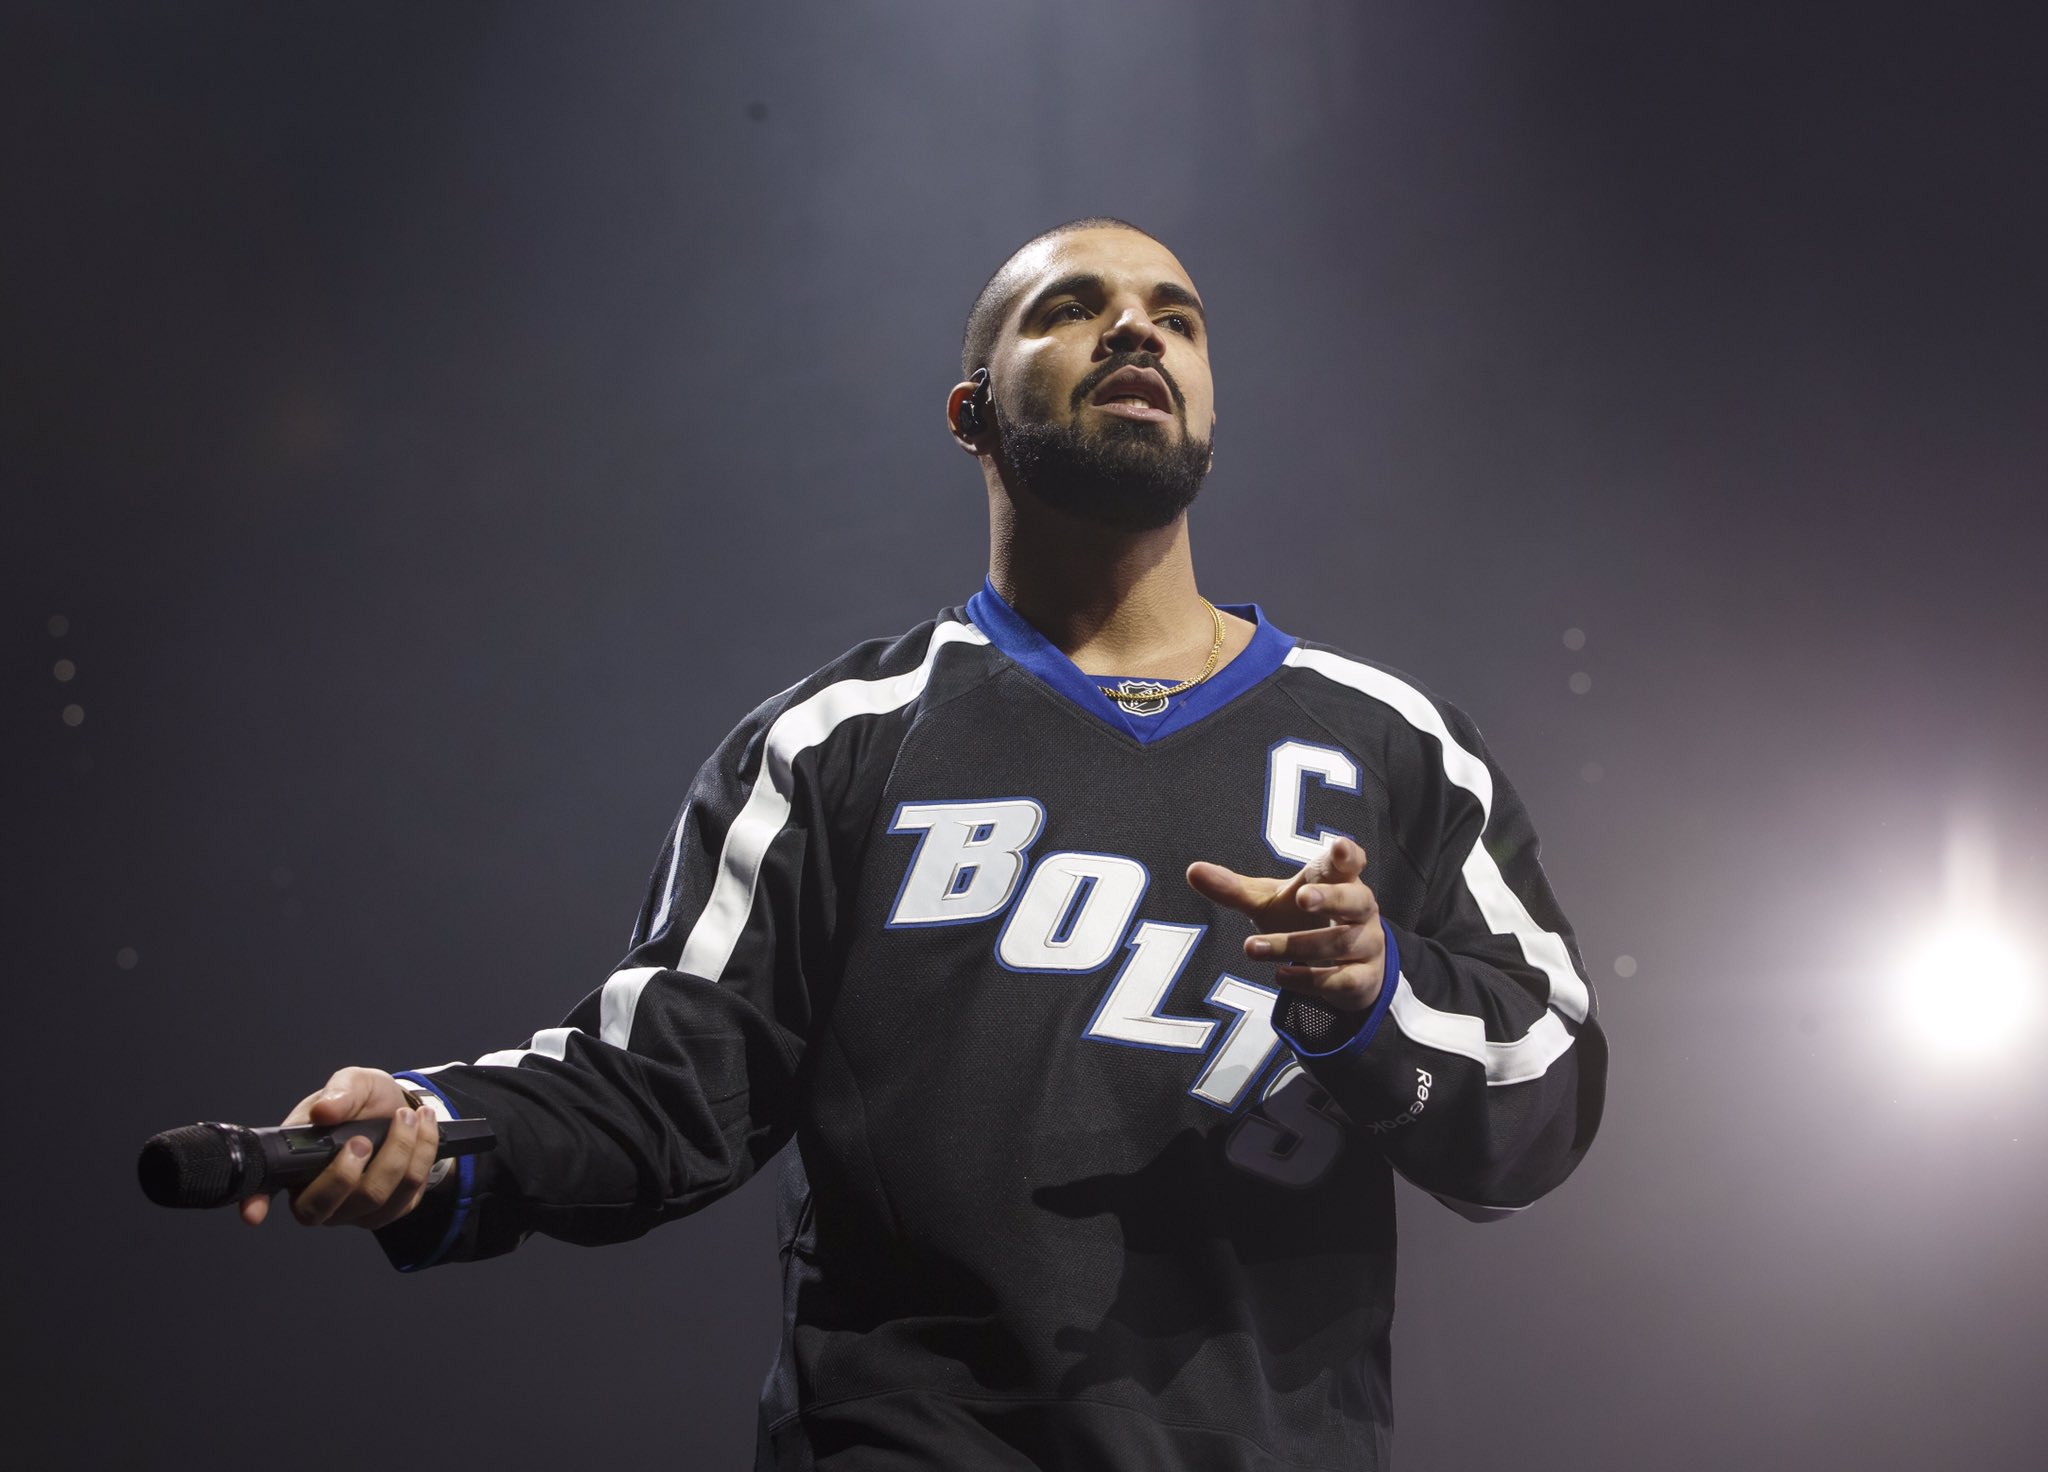 Drake usando a jersey do Tampa Bay Lightning em turnê